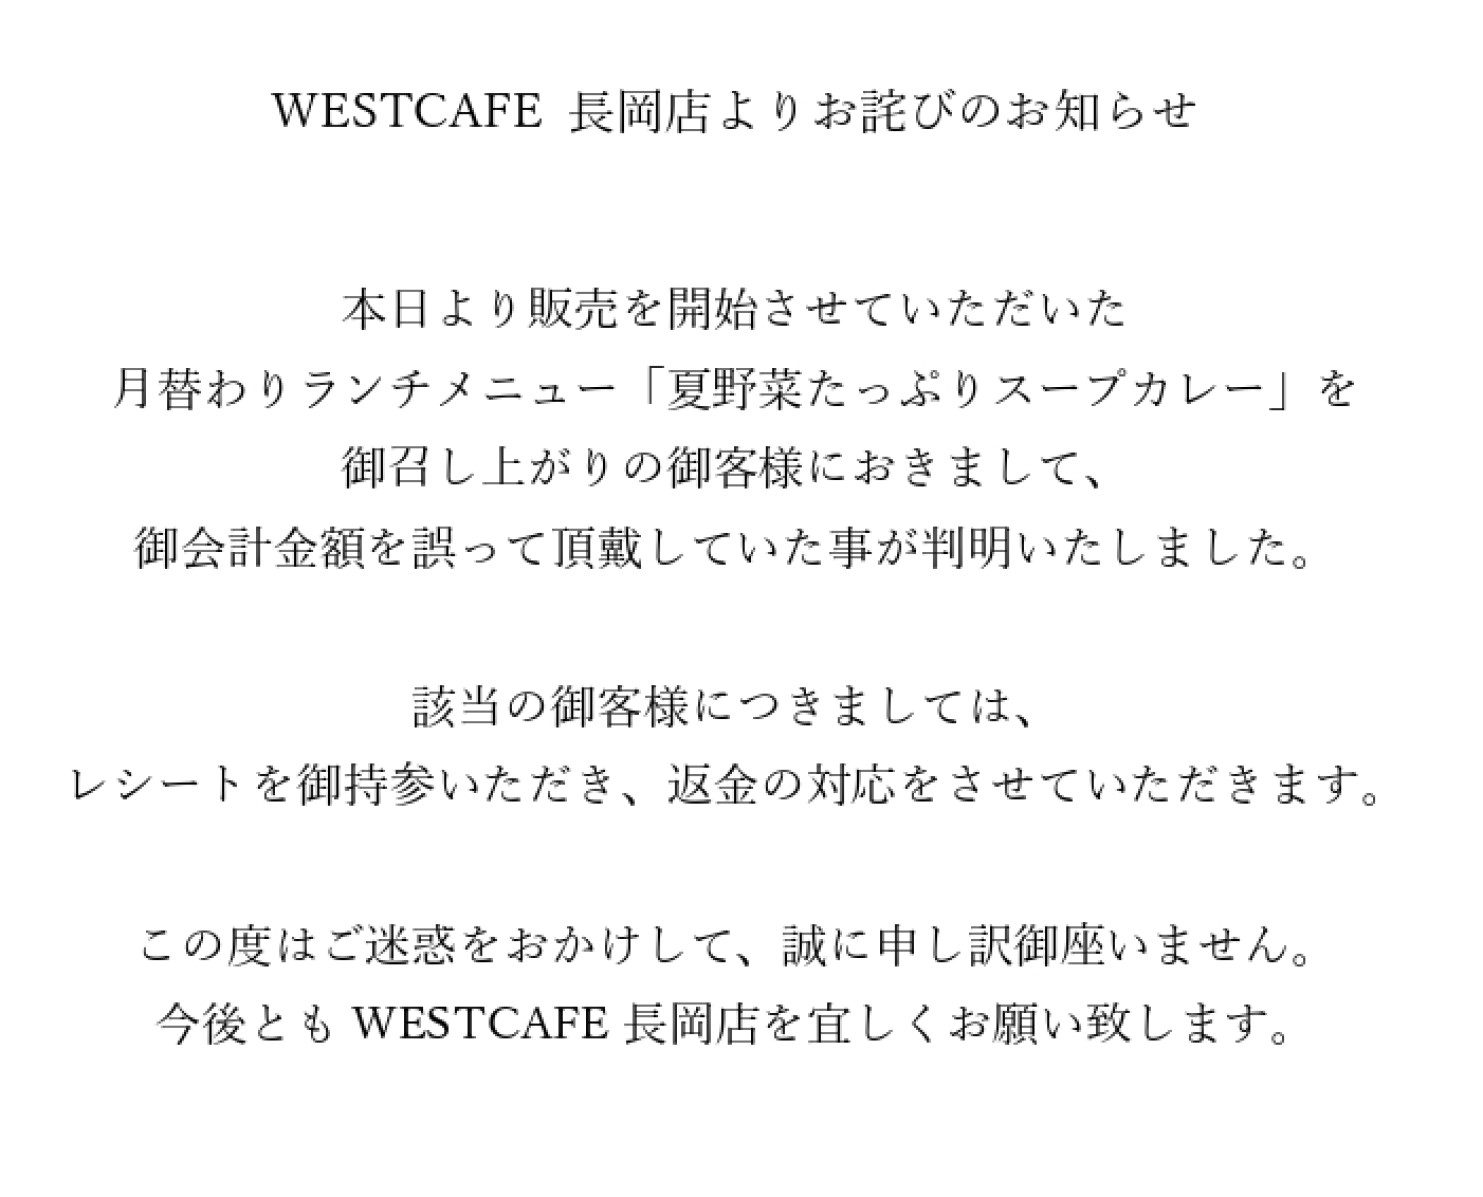 WESTCAFE長岡店よりお詫びのお知らせ